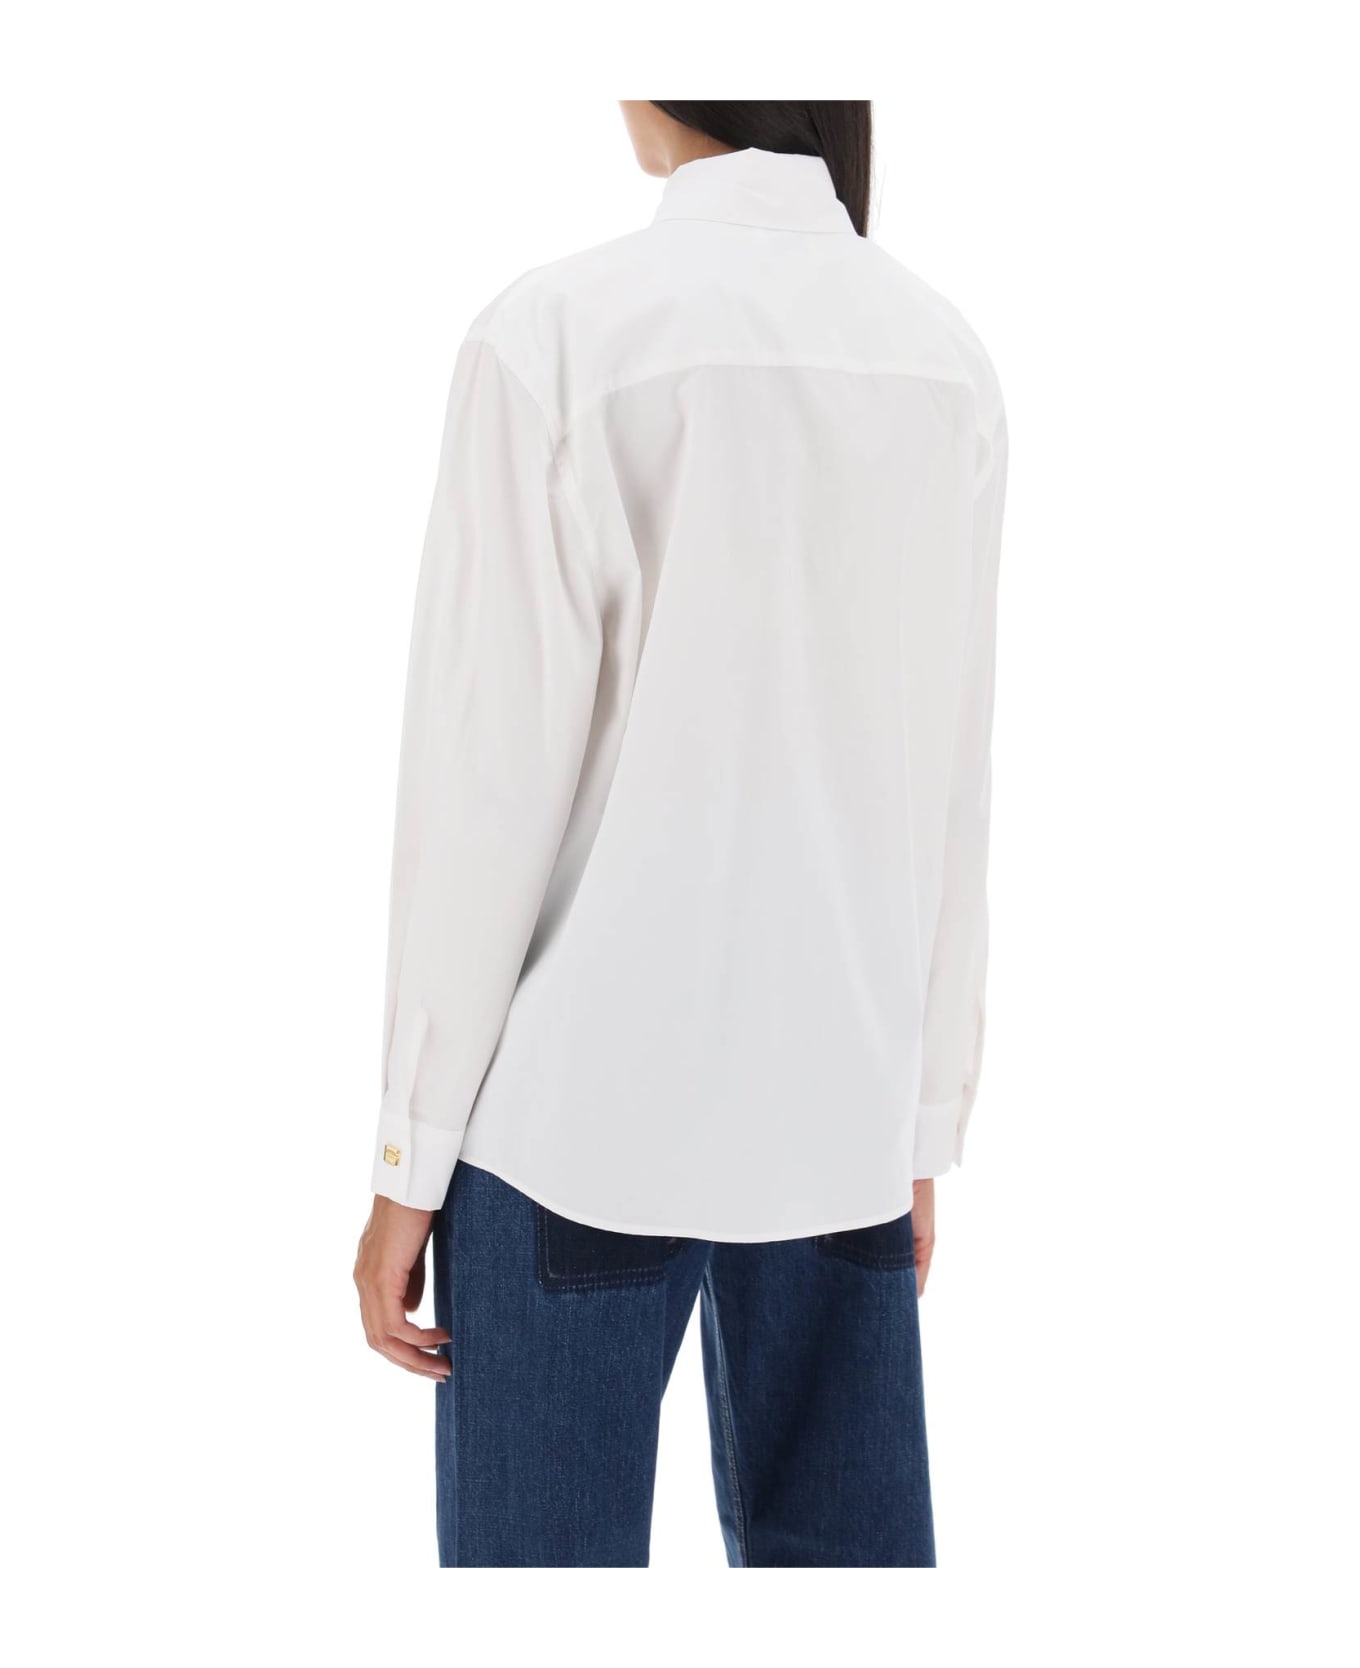 MVP Wardrobe 'matteotti' Cotton Shirt - PANNA (White)